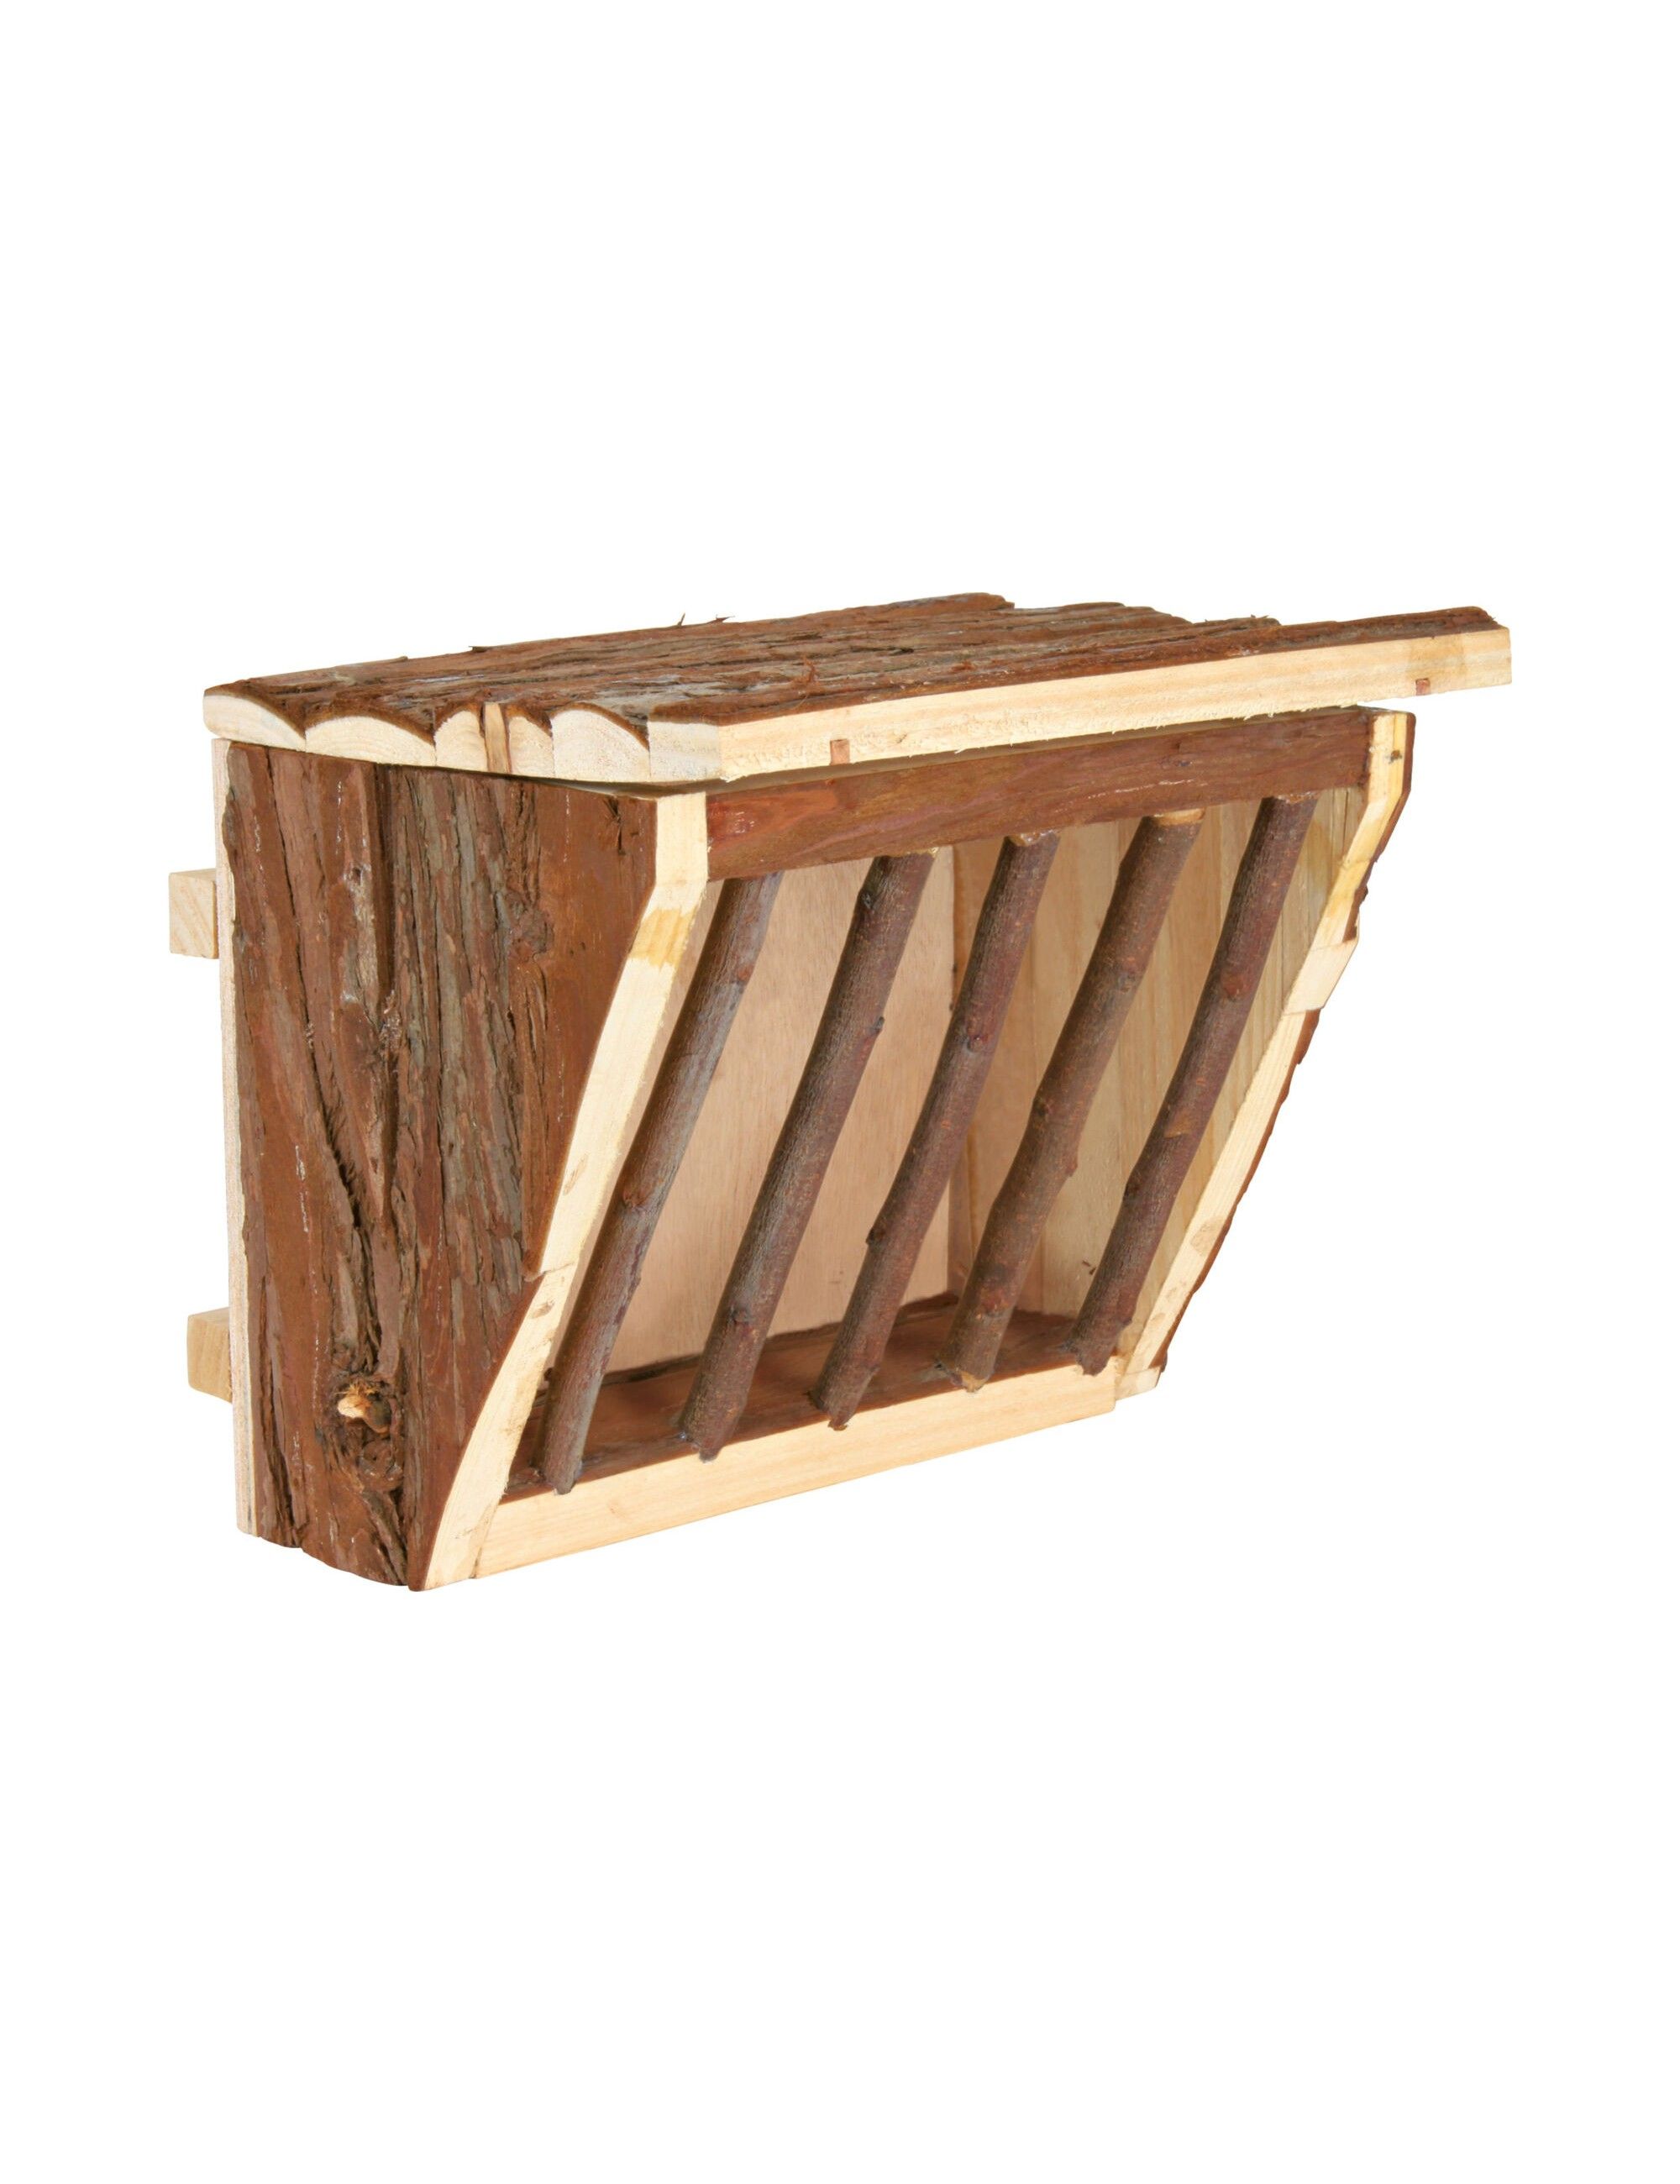 TRIXIE - Wooden Hay Rack